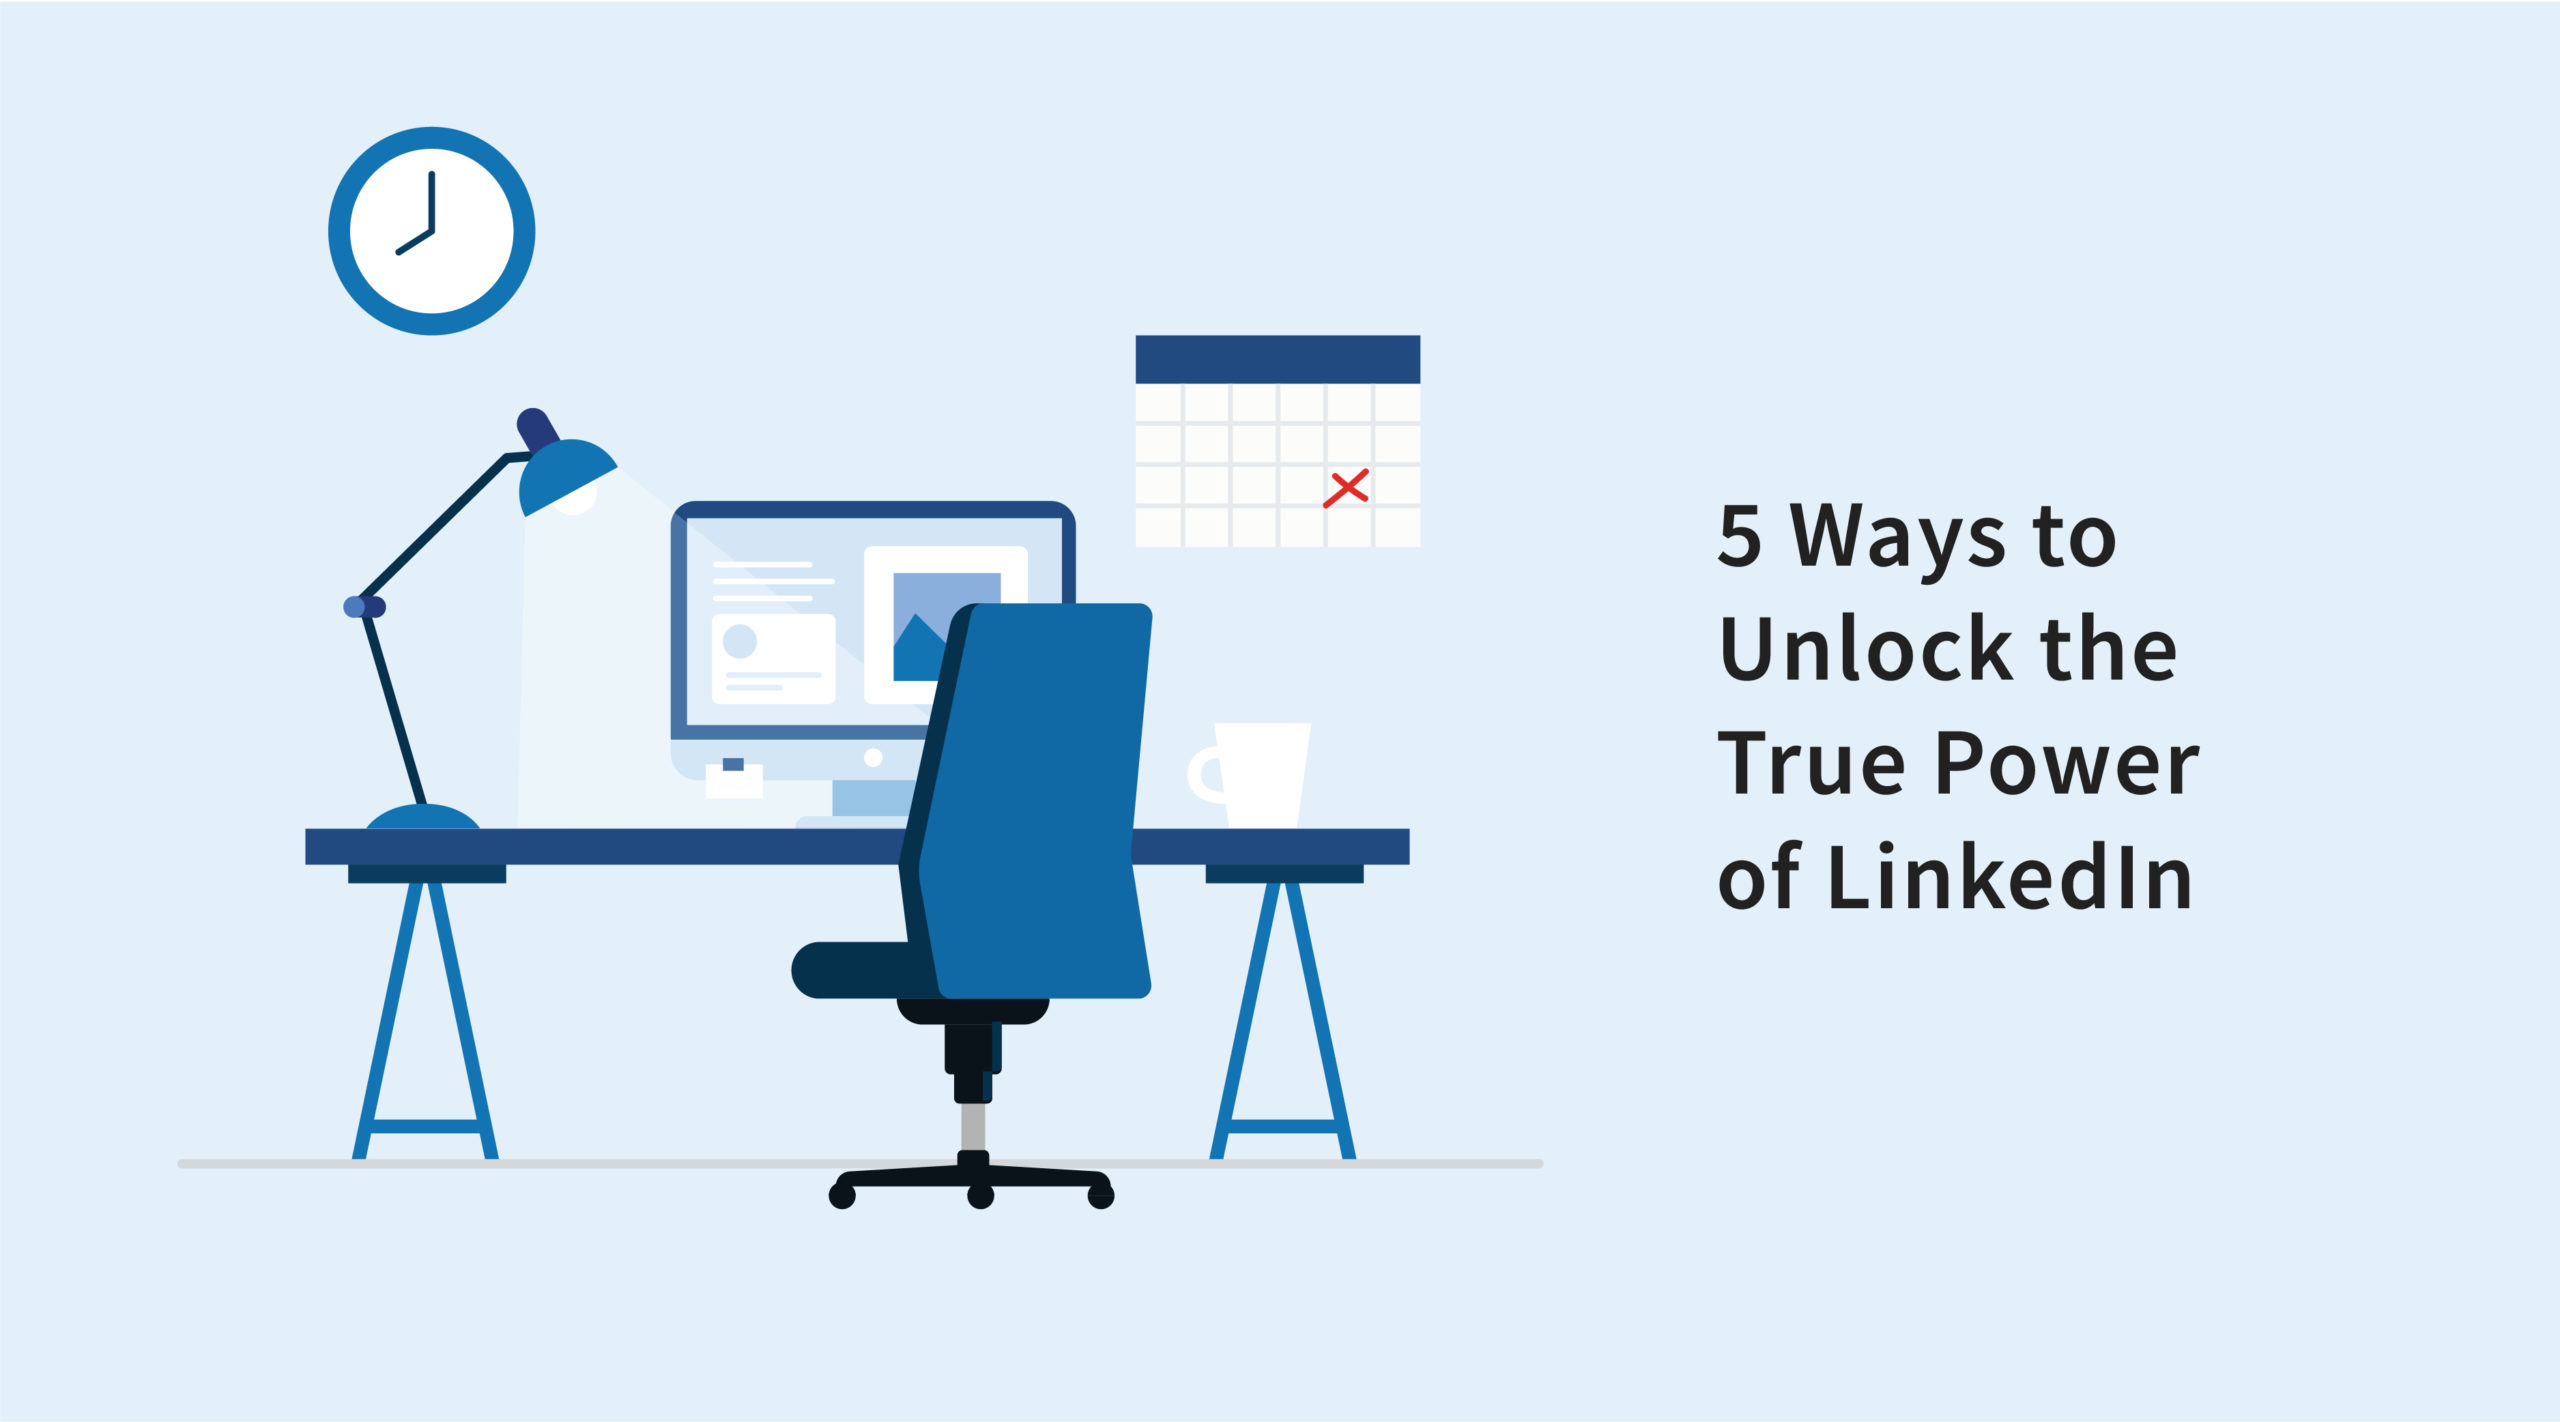 5 Ways to Unlock the True Power of LinkedIn